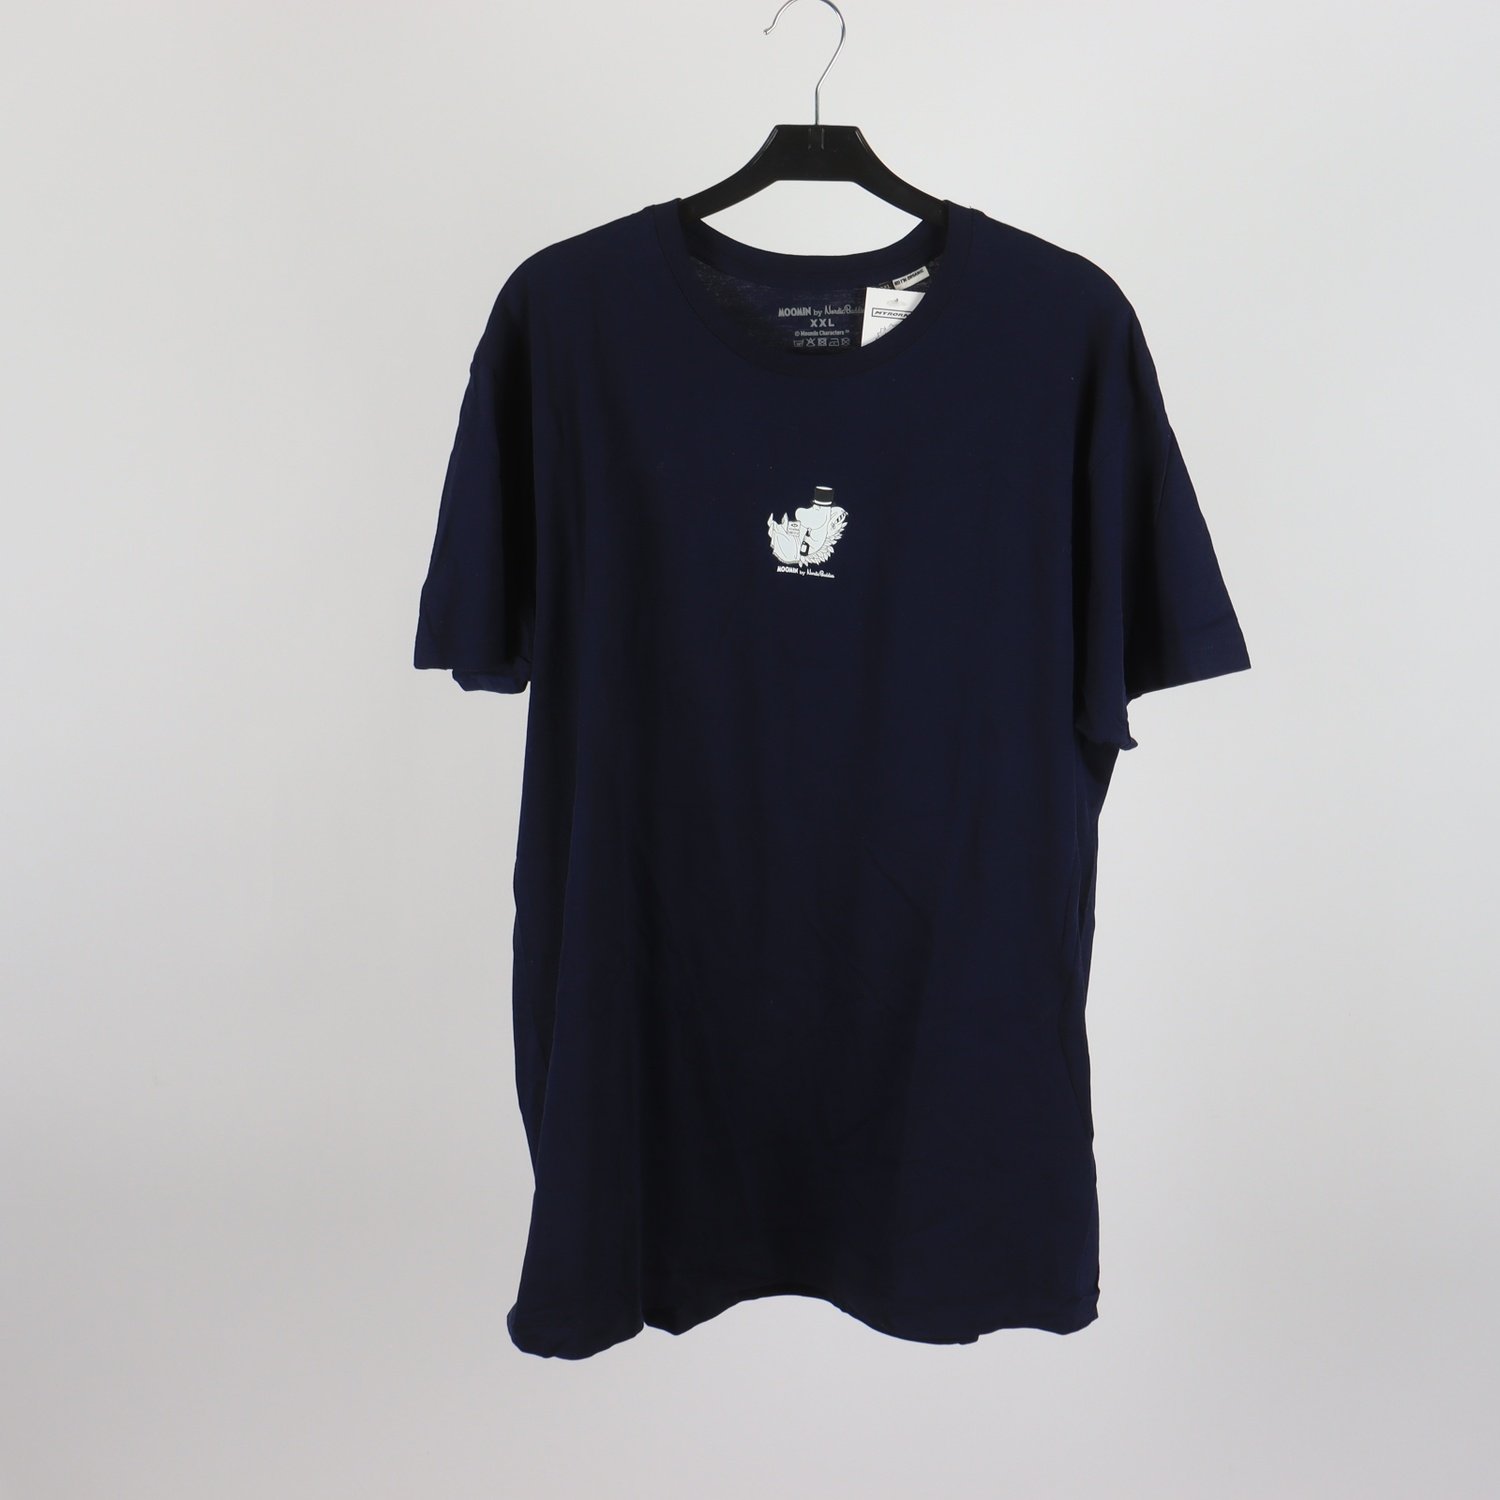 T-shirt, Moomin x Nordic Buddies, blå, stl. 2XL